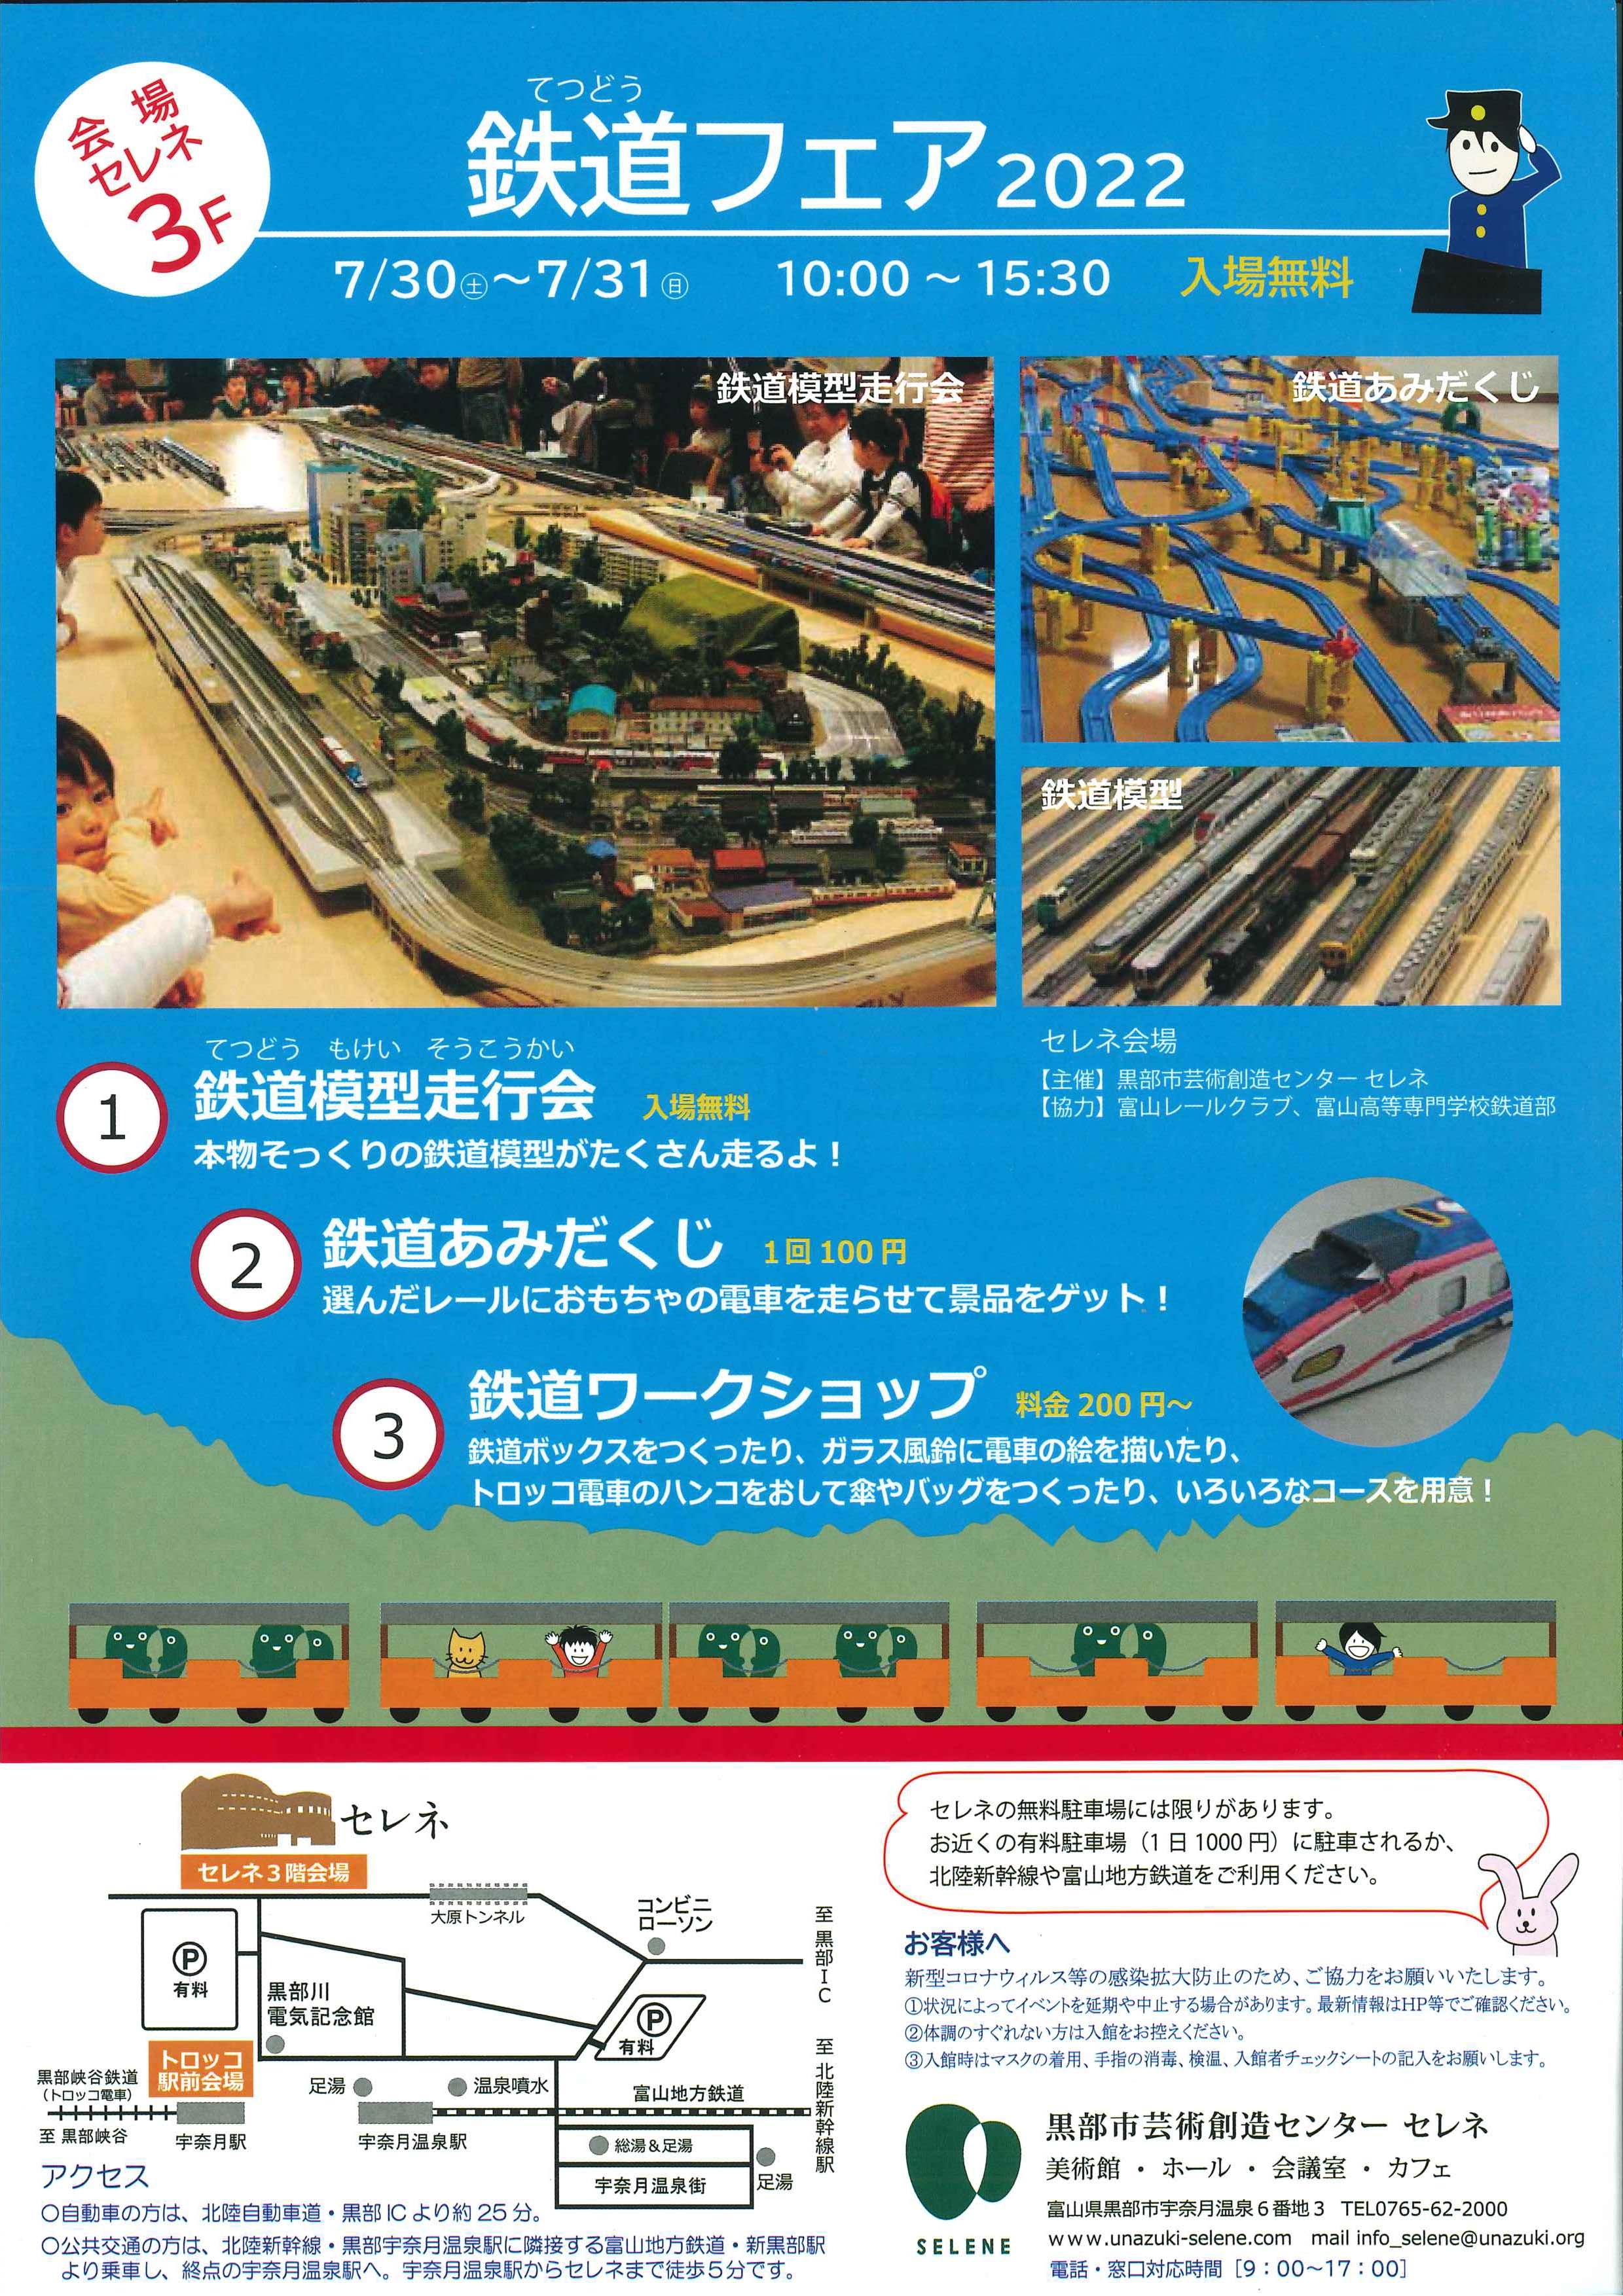 https://www.shonan-monorail.co.jp/news/upload/kurobe_ura.jpeg